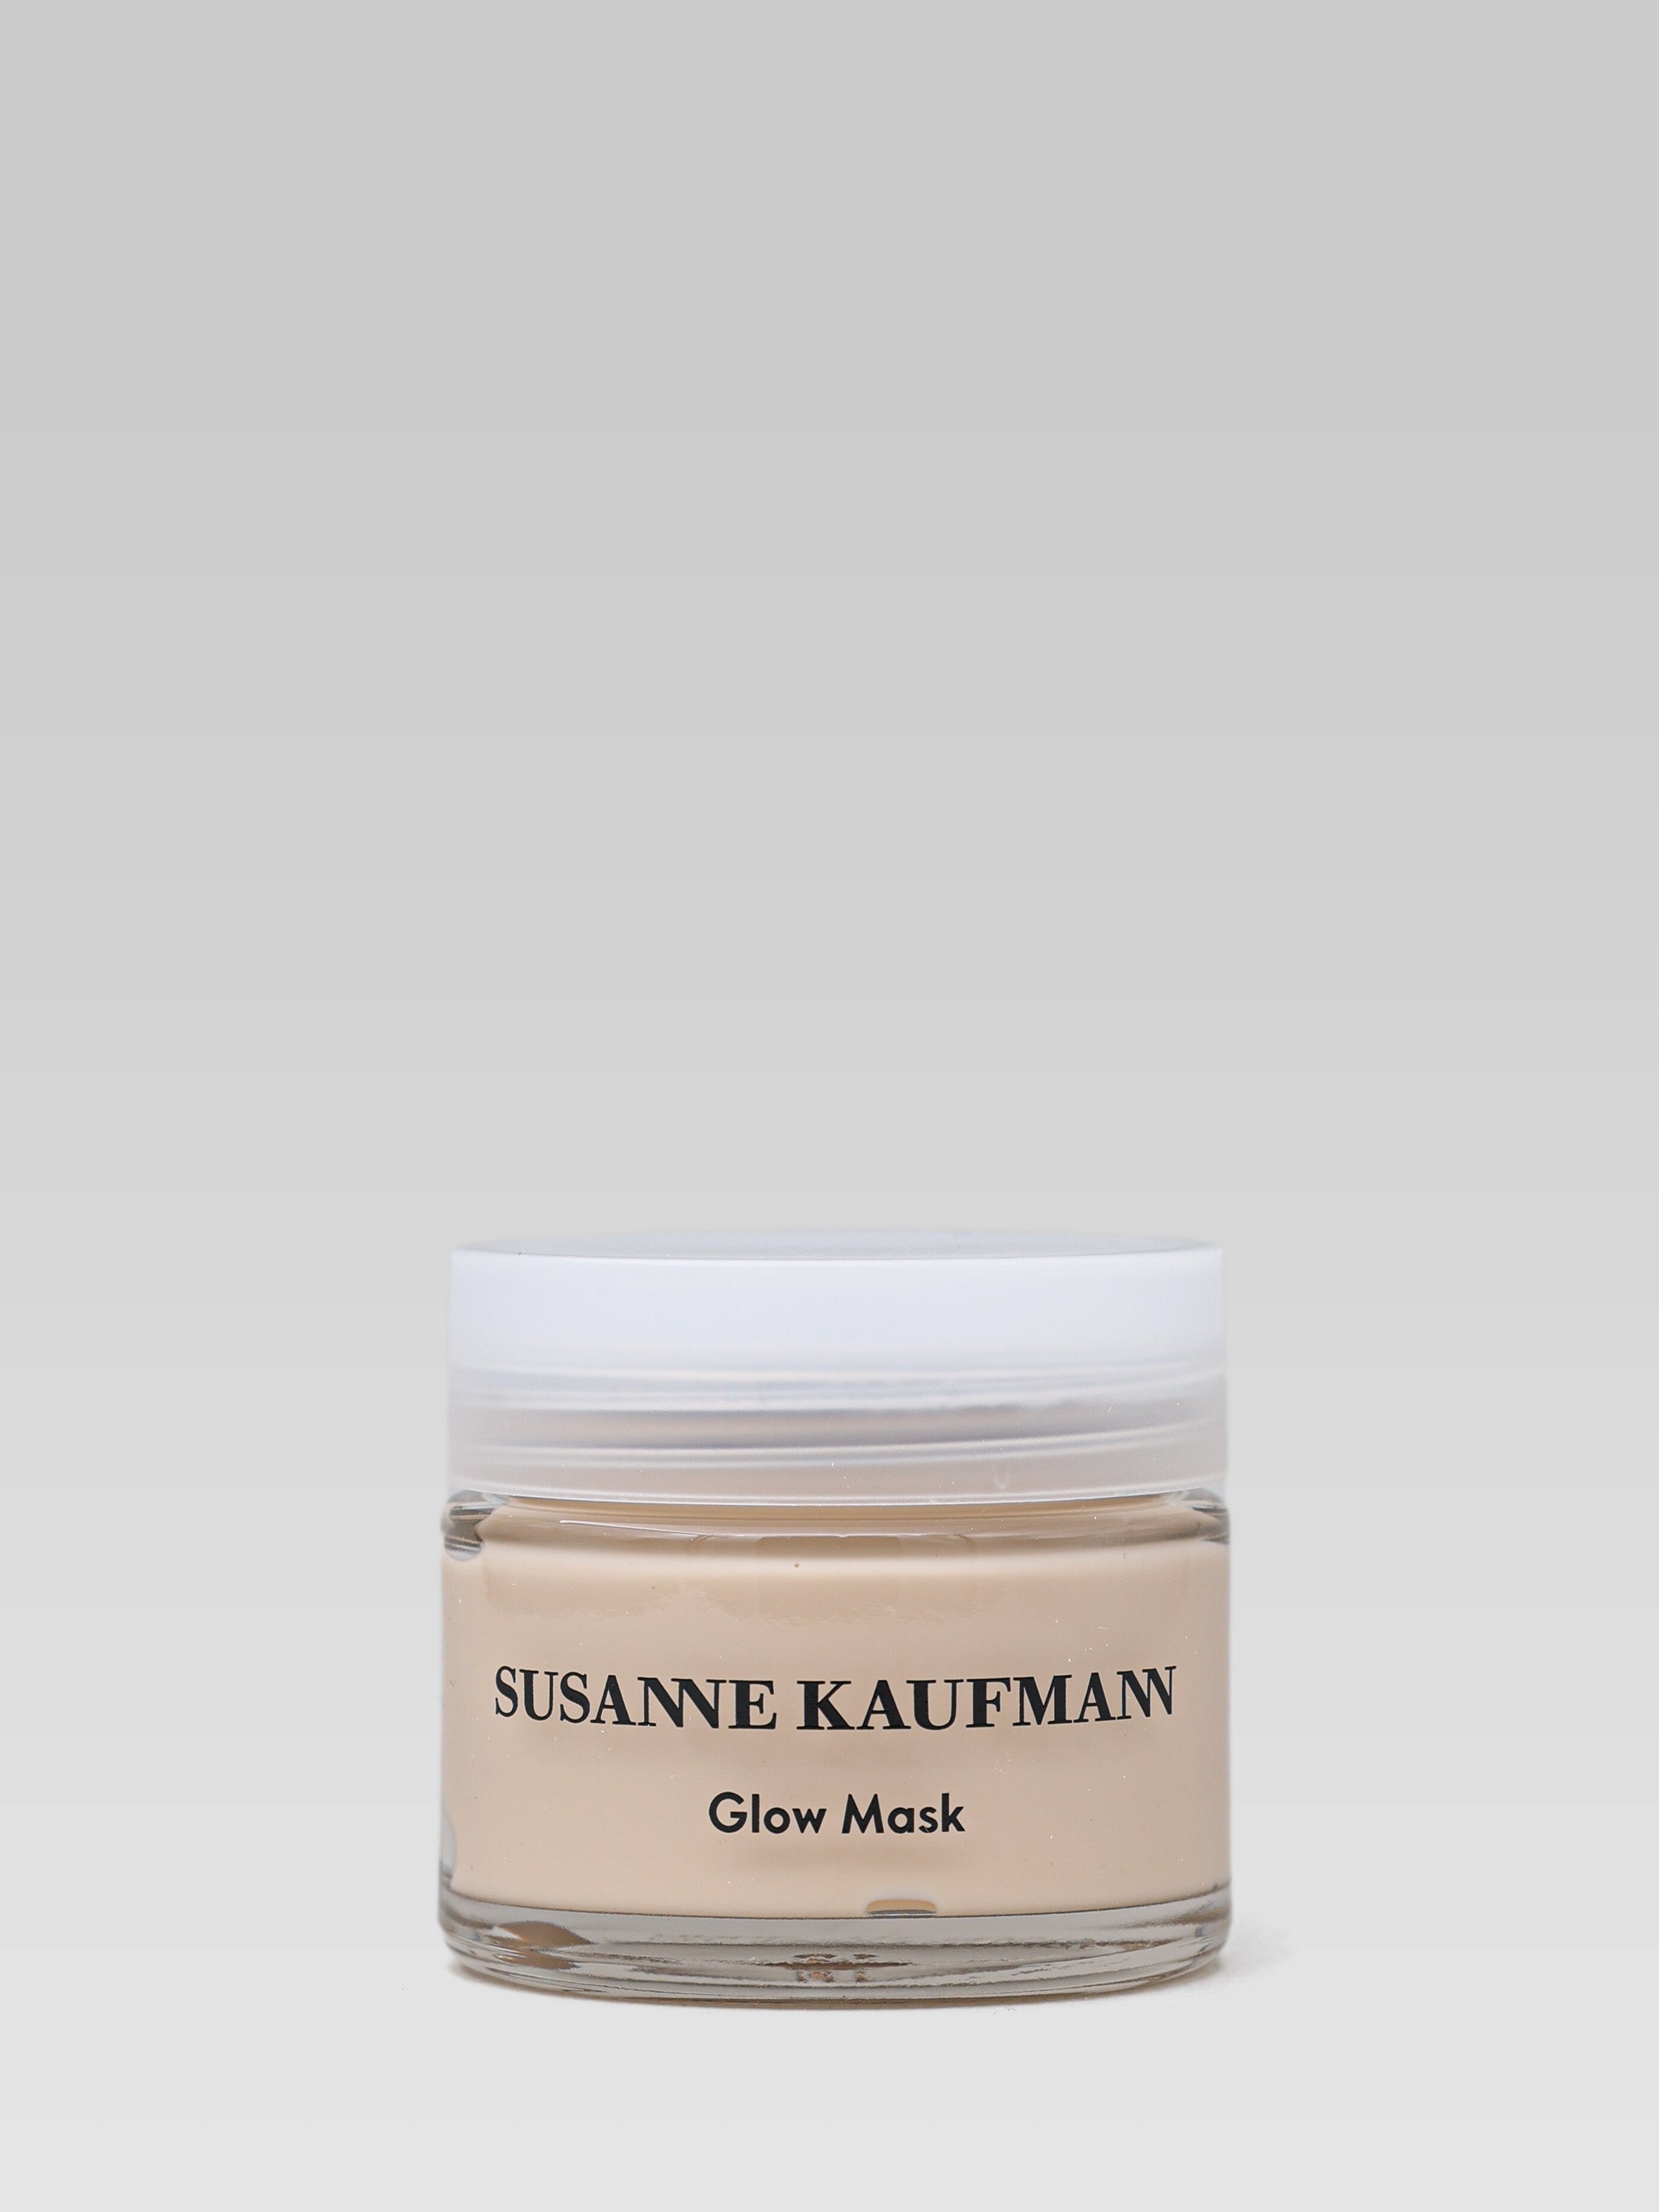 Susanne Kaufmann Glow Mask product shot 